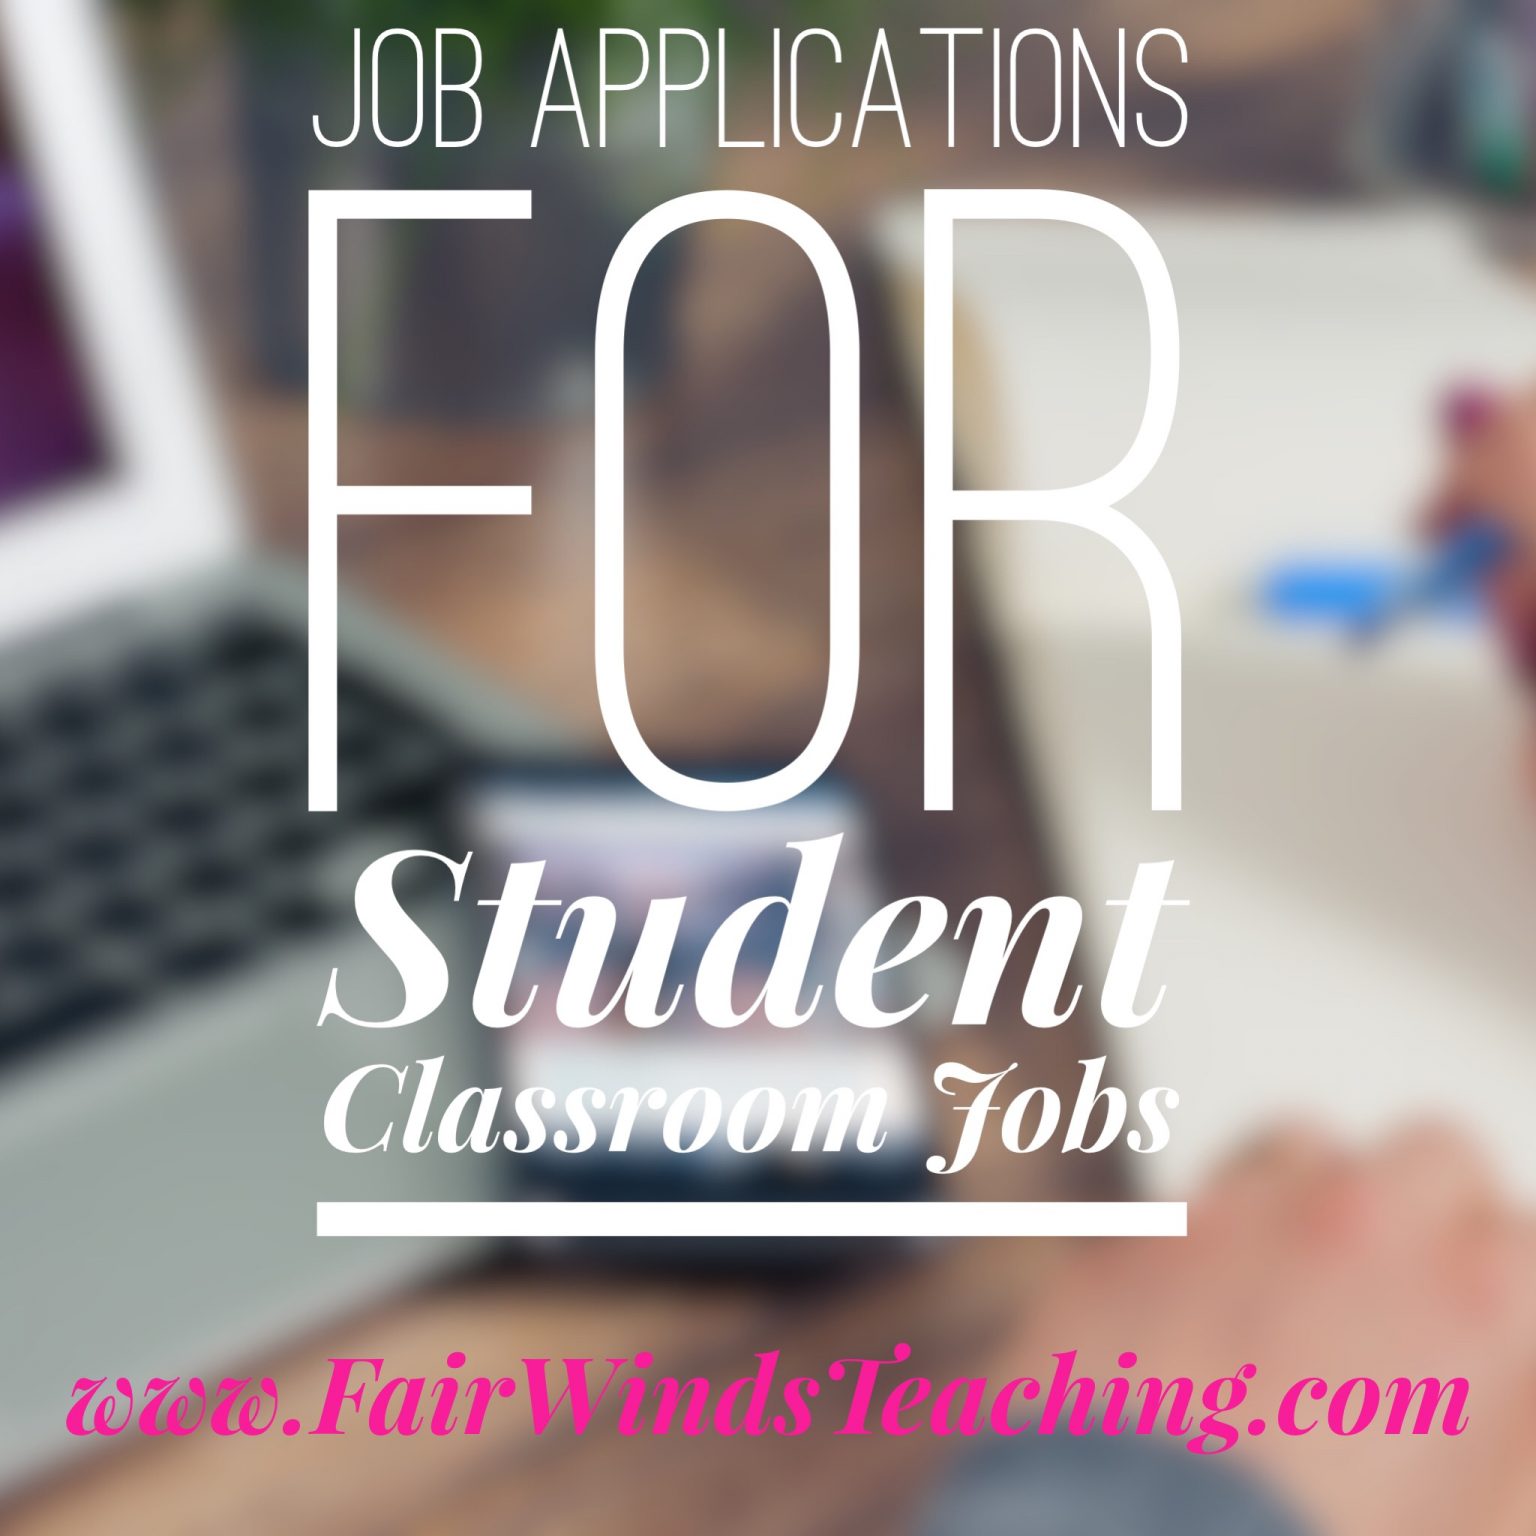 Job Applications for Students for classroom jobs